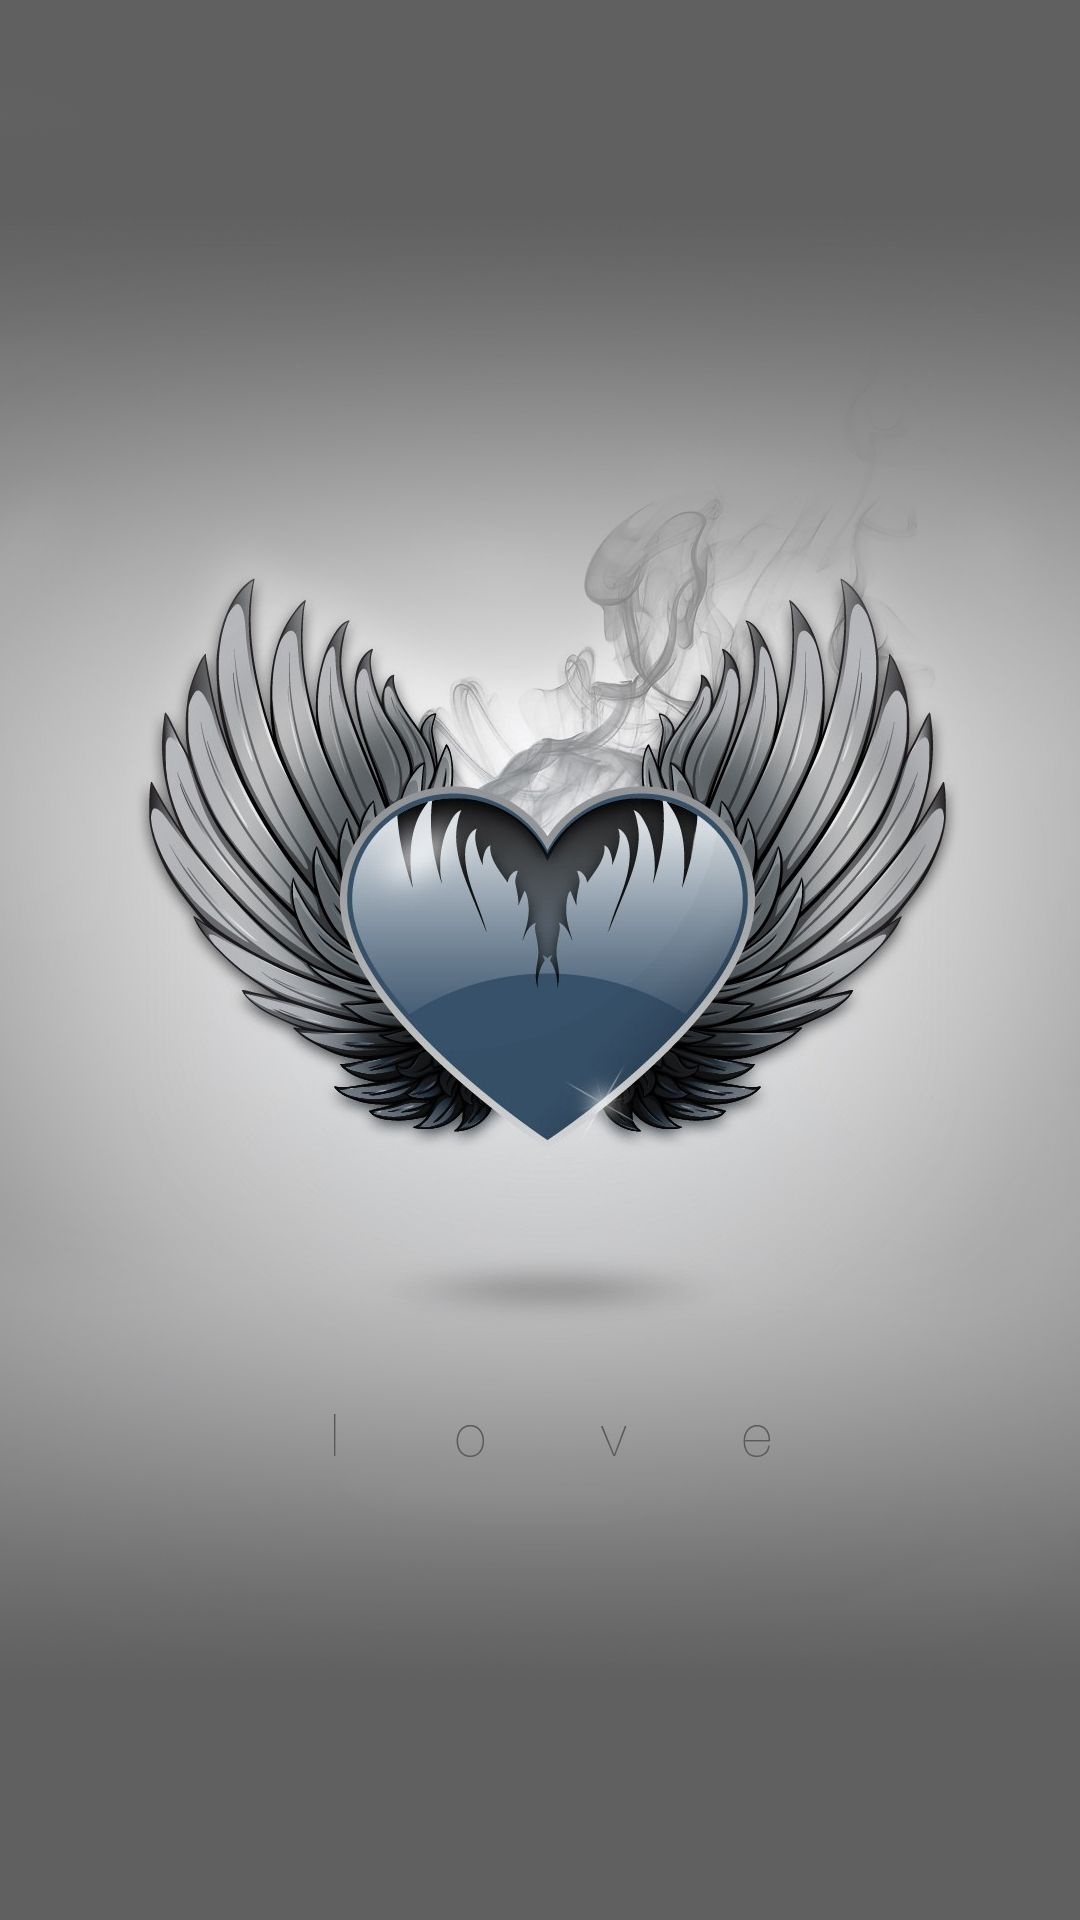 Heart With Wings, Love wallpaper, Wings wallpaper, Romantic imagery, 1080x1920 Full HD Handy